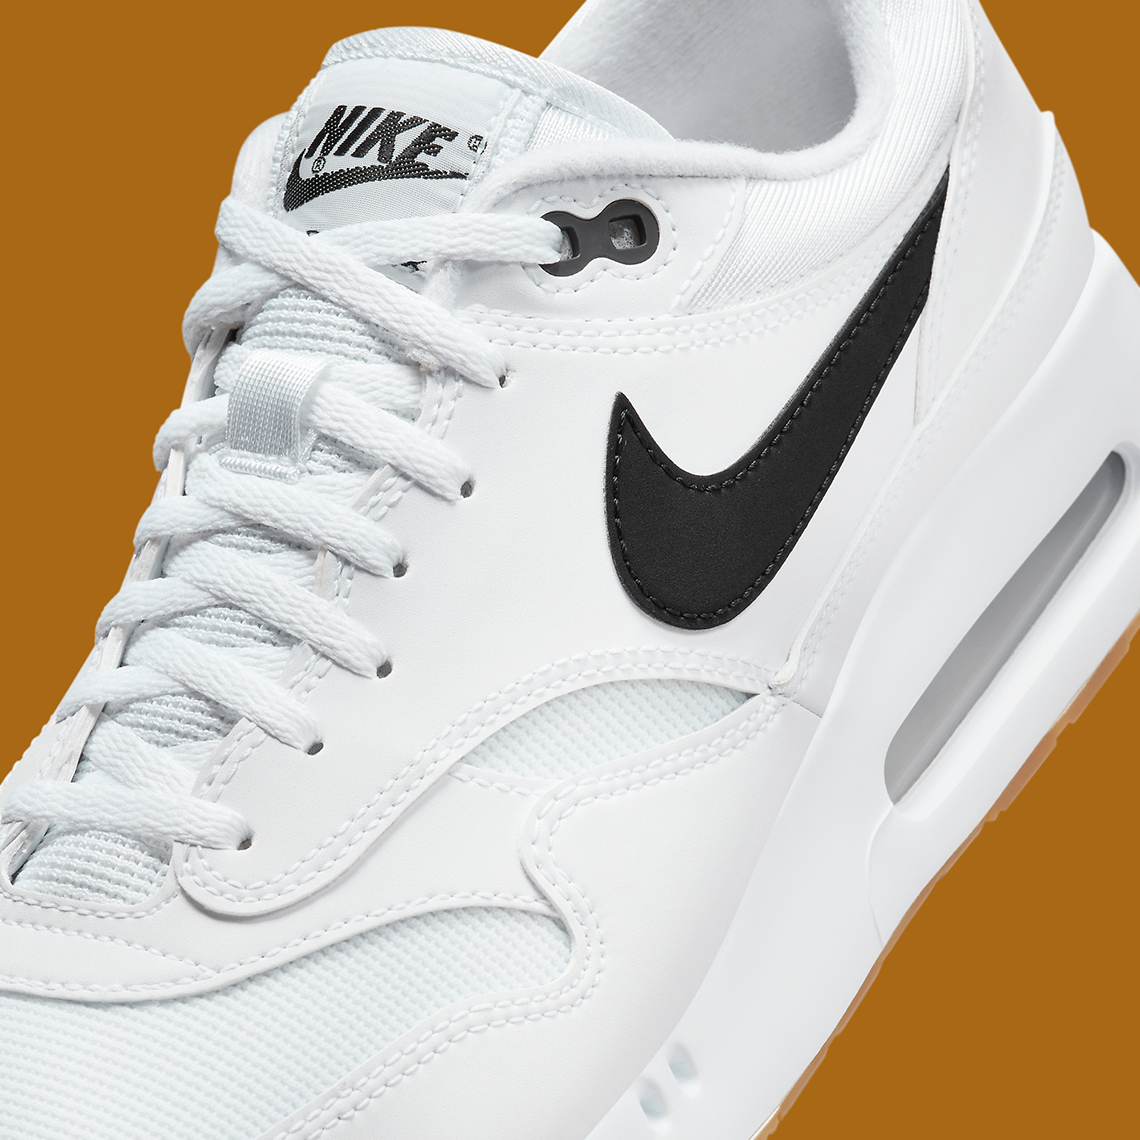 Nike Air Max 97 Nintendo 64 Jackets to Match 1 86 Og Golf White Black Gum Fn0697 100 7